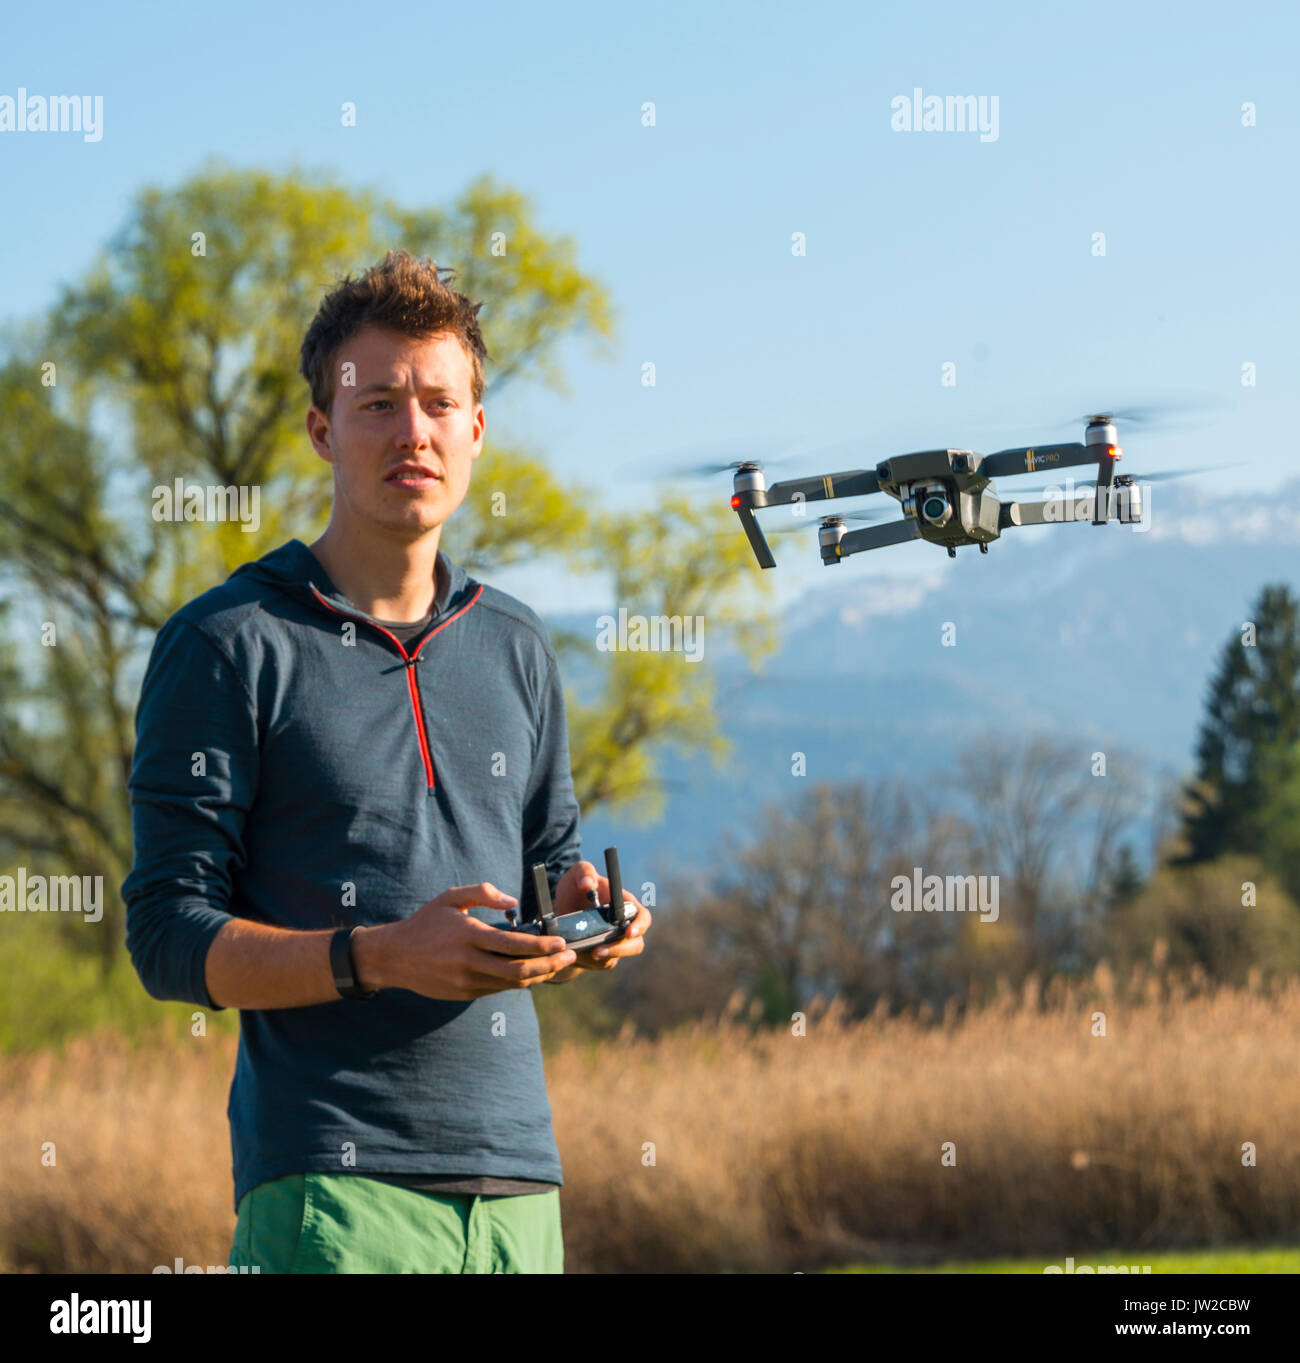 Joven control volando quadrocopter, controlado de manera remota teledirigido con cámara, DJI Mavic Foto de stock